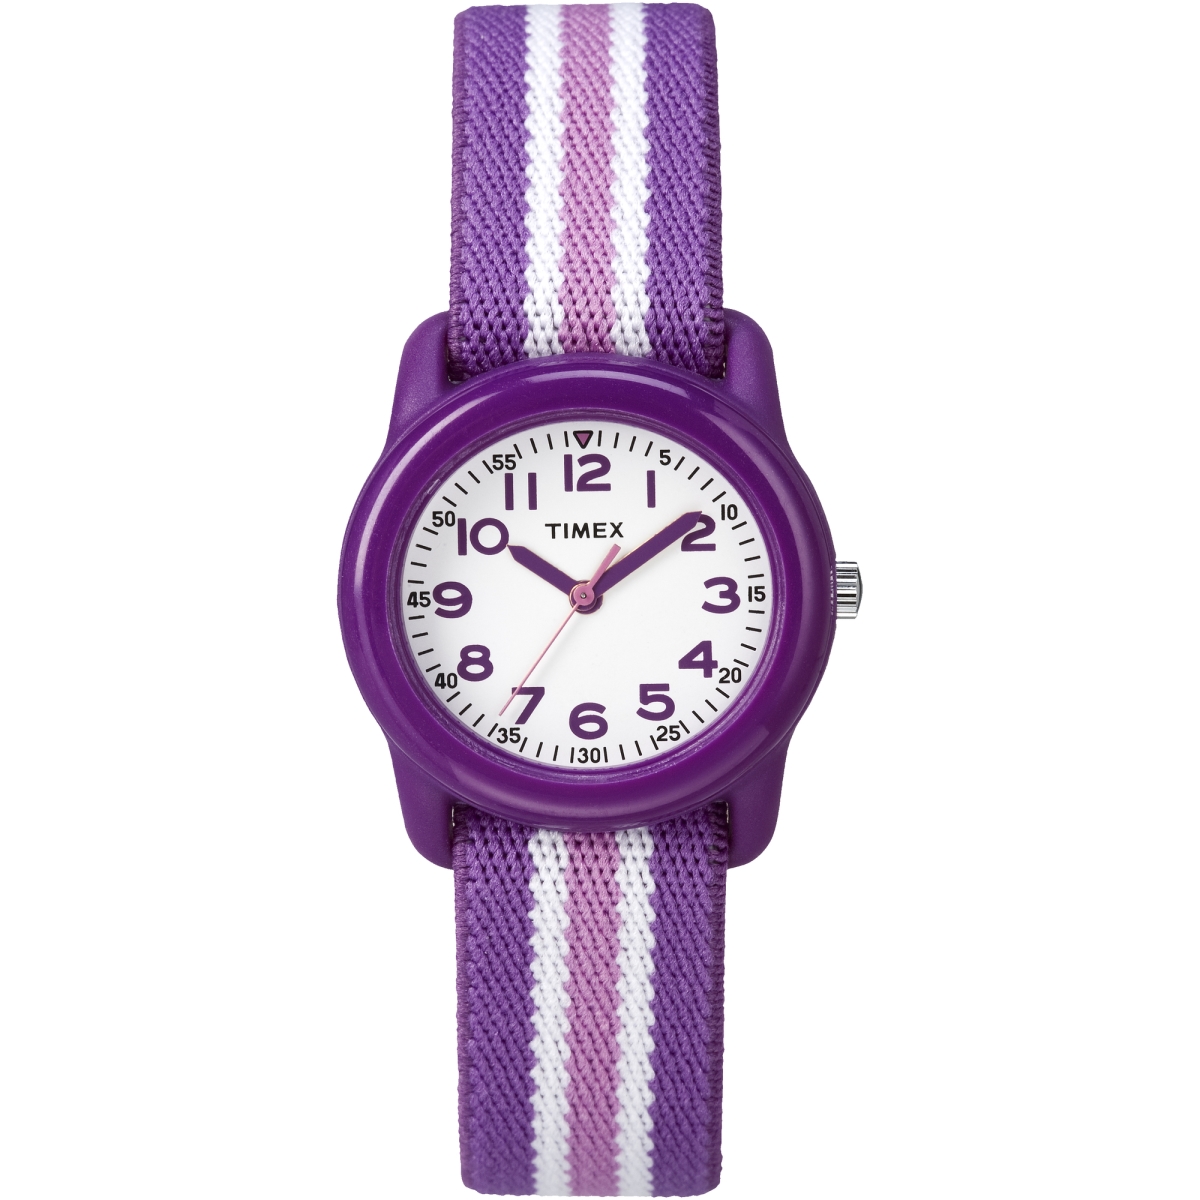 Picture of Timex TW7C061009J 29 mm Analog Purple-Stripe Watch